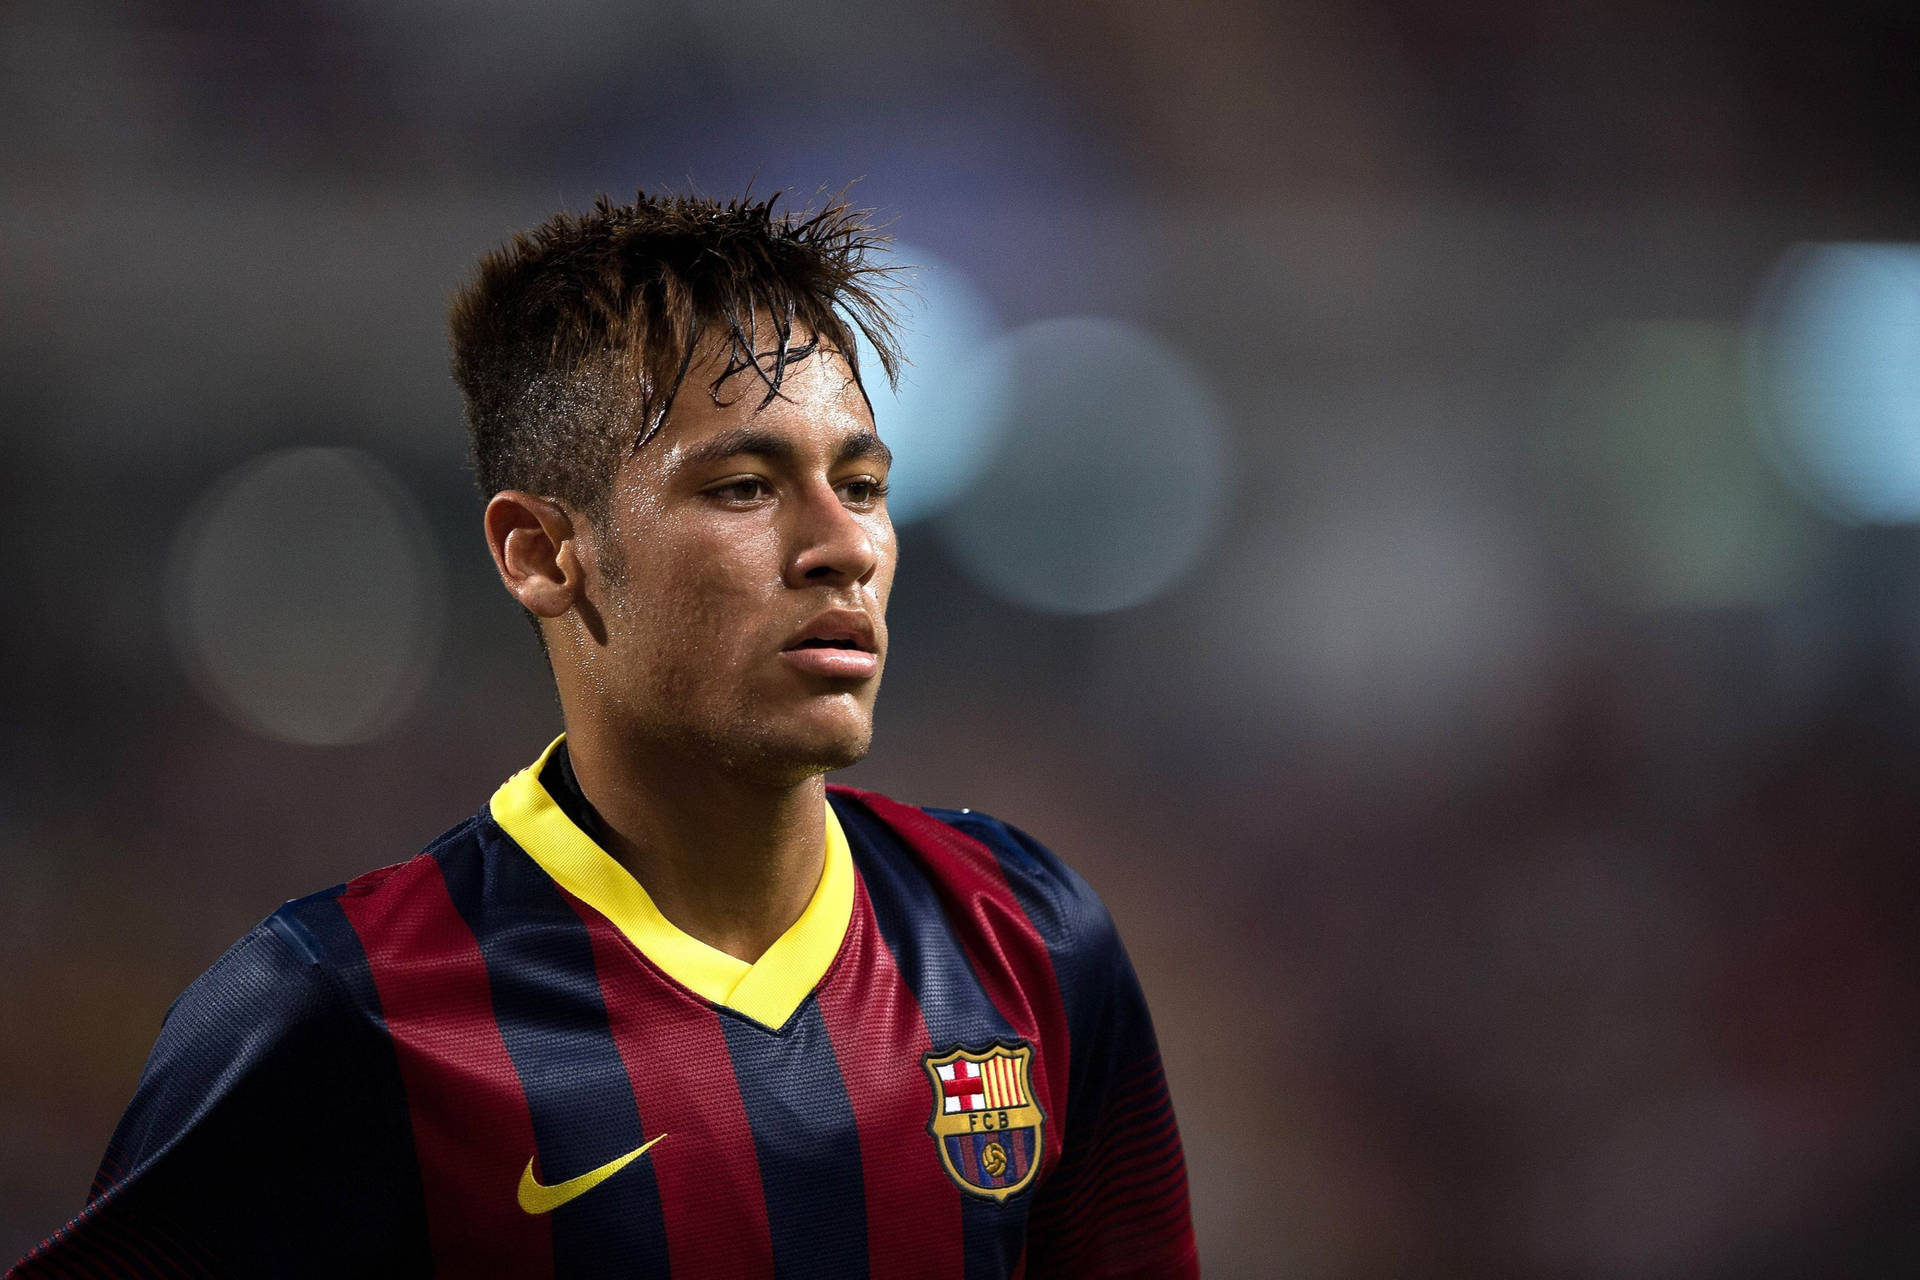 Neymar Jr. In Action - High Definition 4k Wallpaper